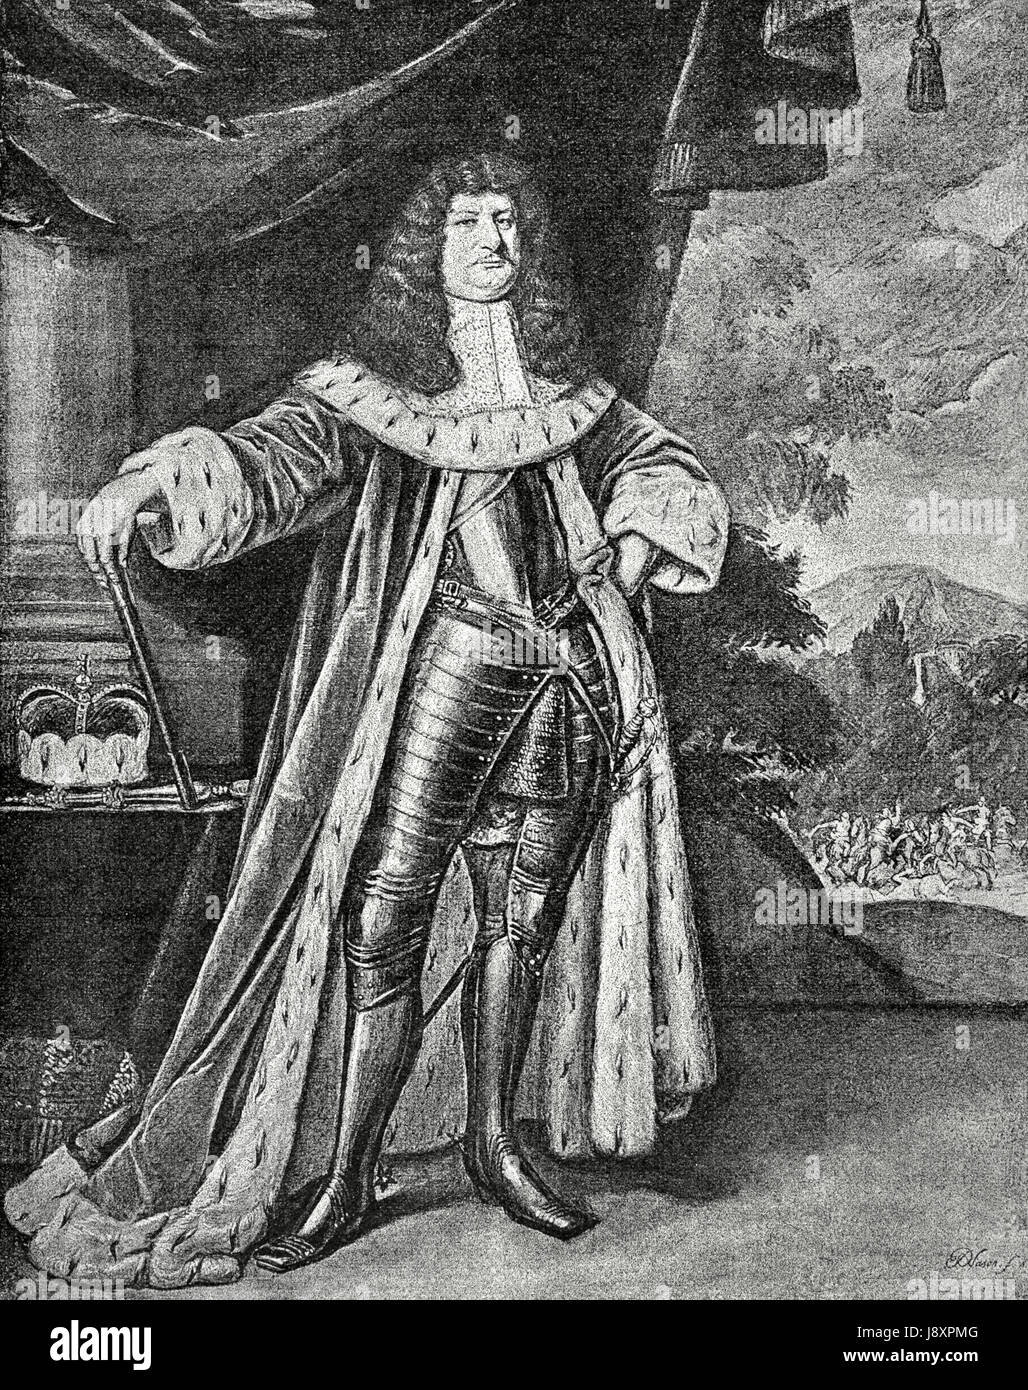 Frederich William (1620-1688). Elector of Brandenburg and Duke of Prusia. Portrait. Engraving. 'Historia Universal', 1885. Stock Photo